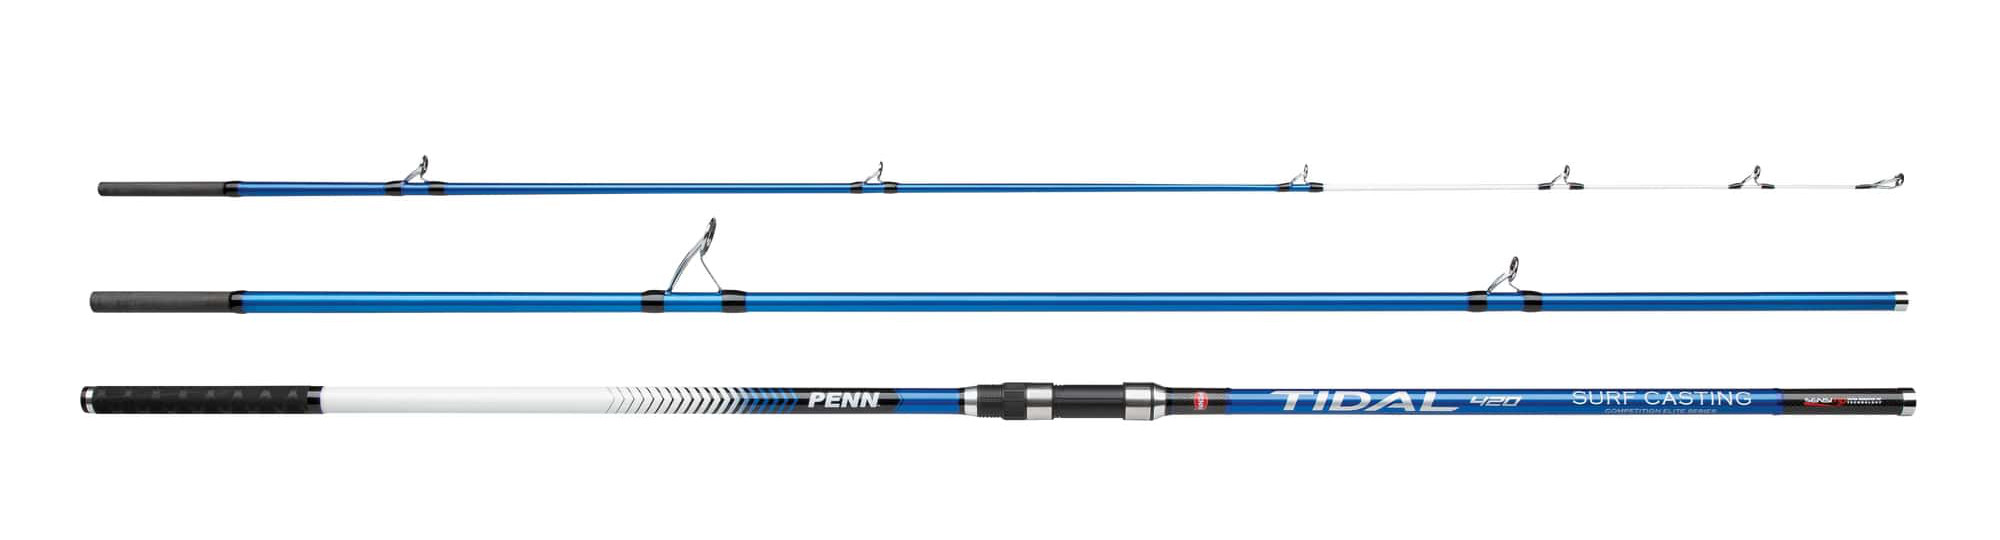 Penn Tidal Surfcasting Rod - 100-250g